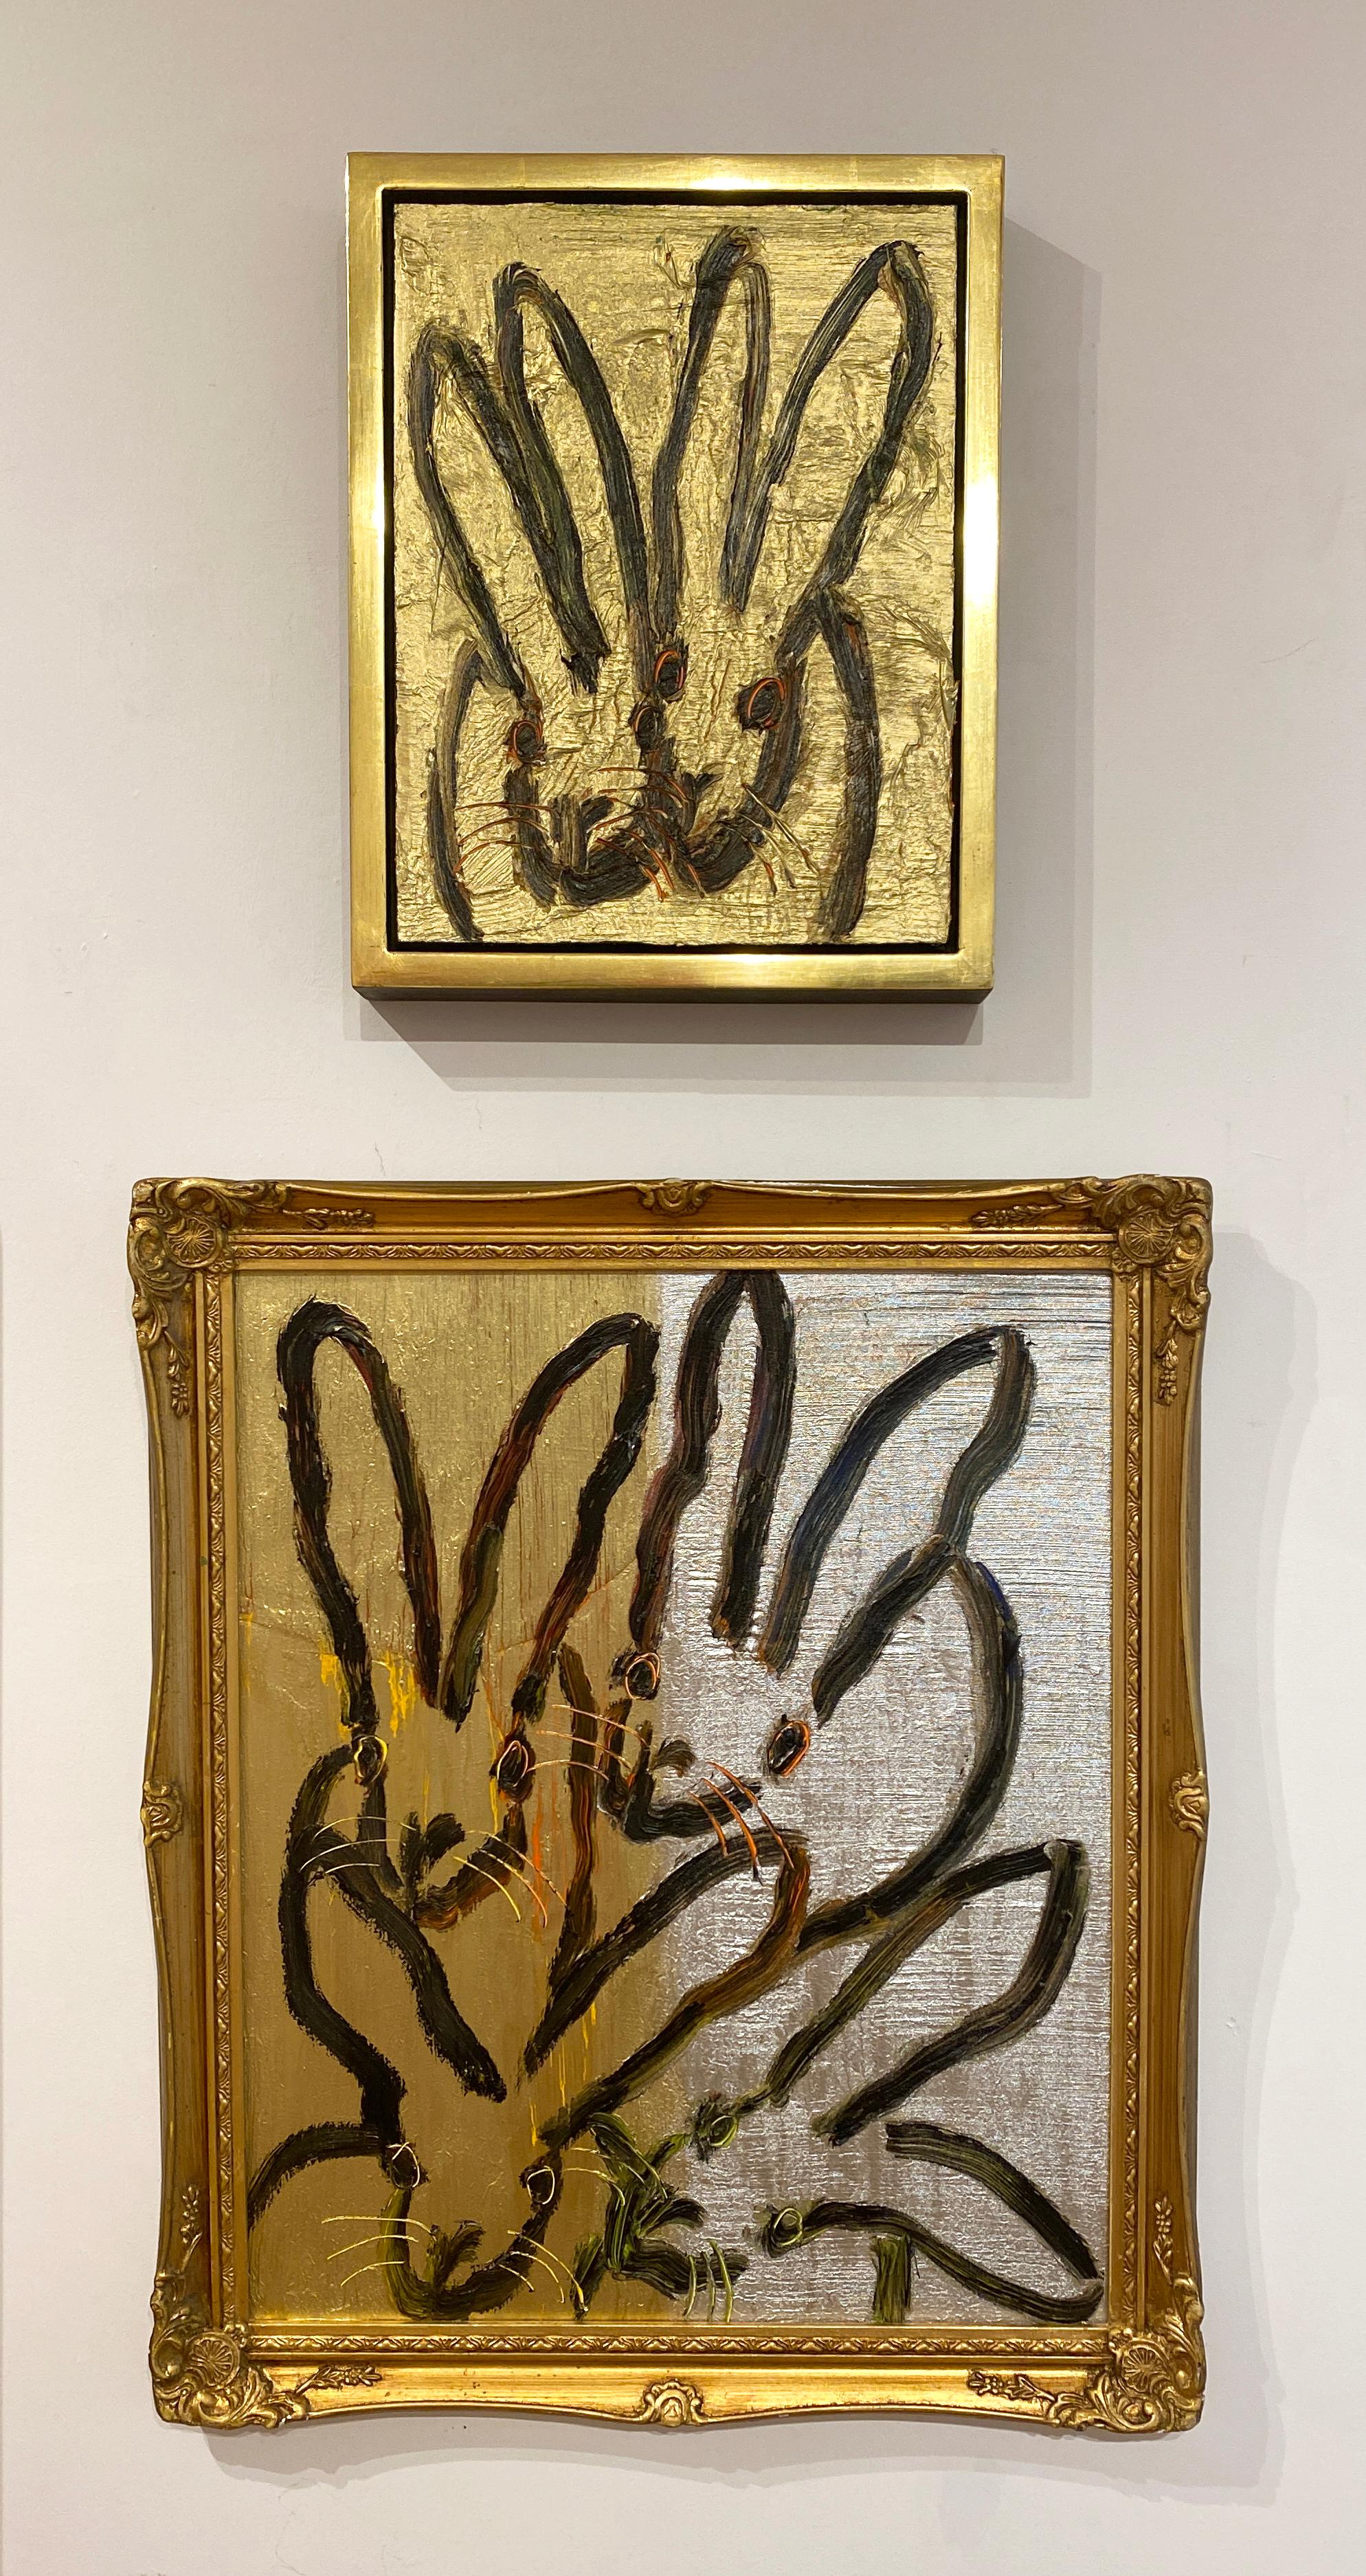 Artist:  Slonem, Hunt
Title:  Couple
Series:  Bunnies
Date:  2020
Medium:  Oil on panel
Unframed Dimensions:  14 x 10.75